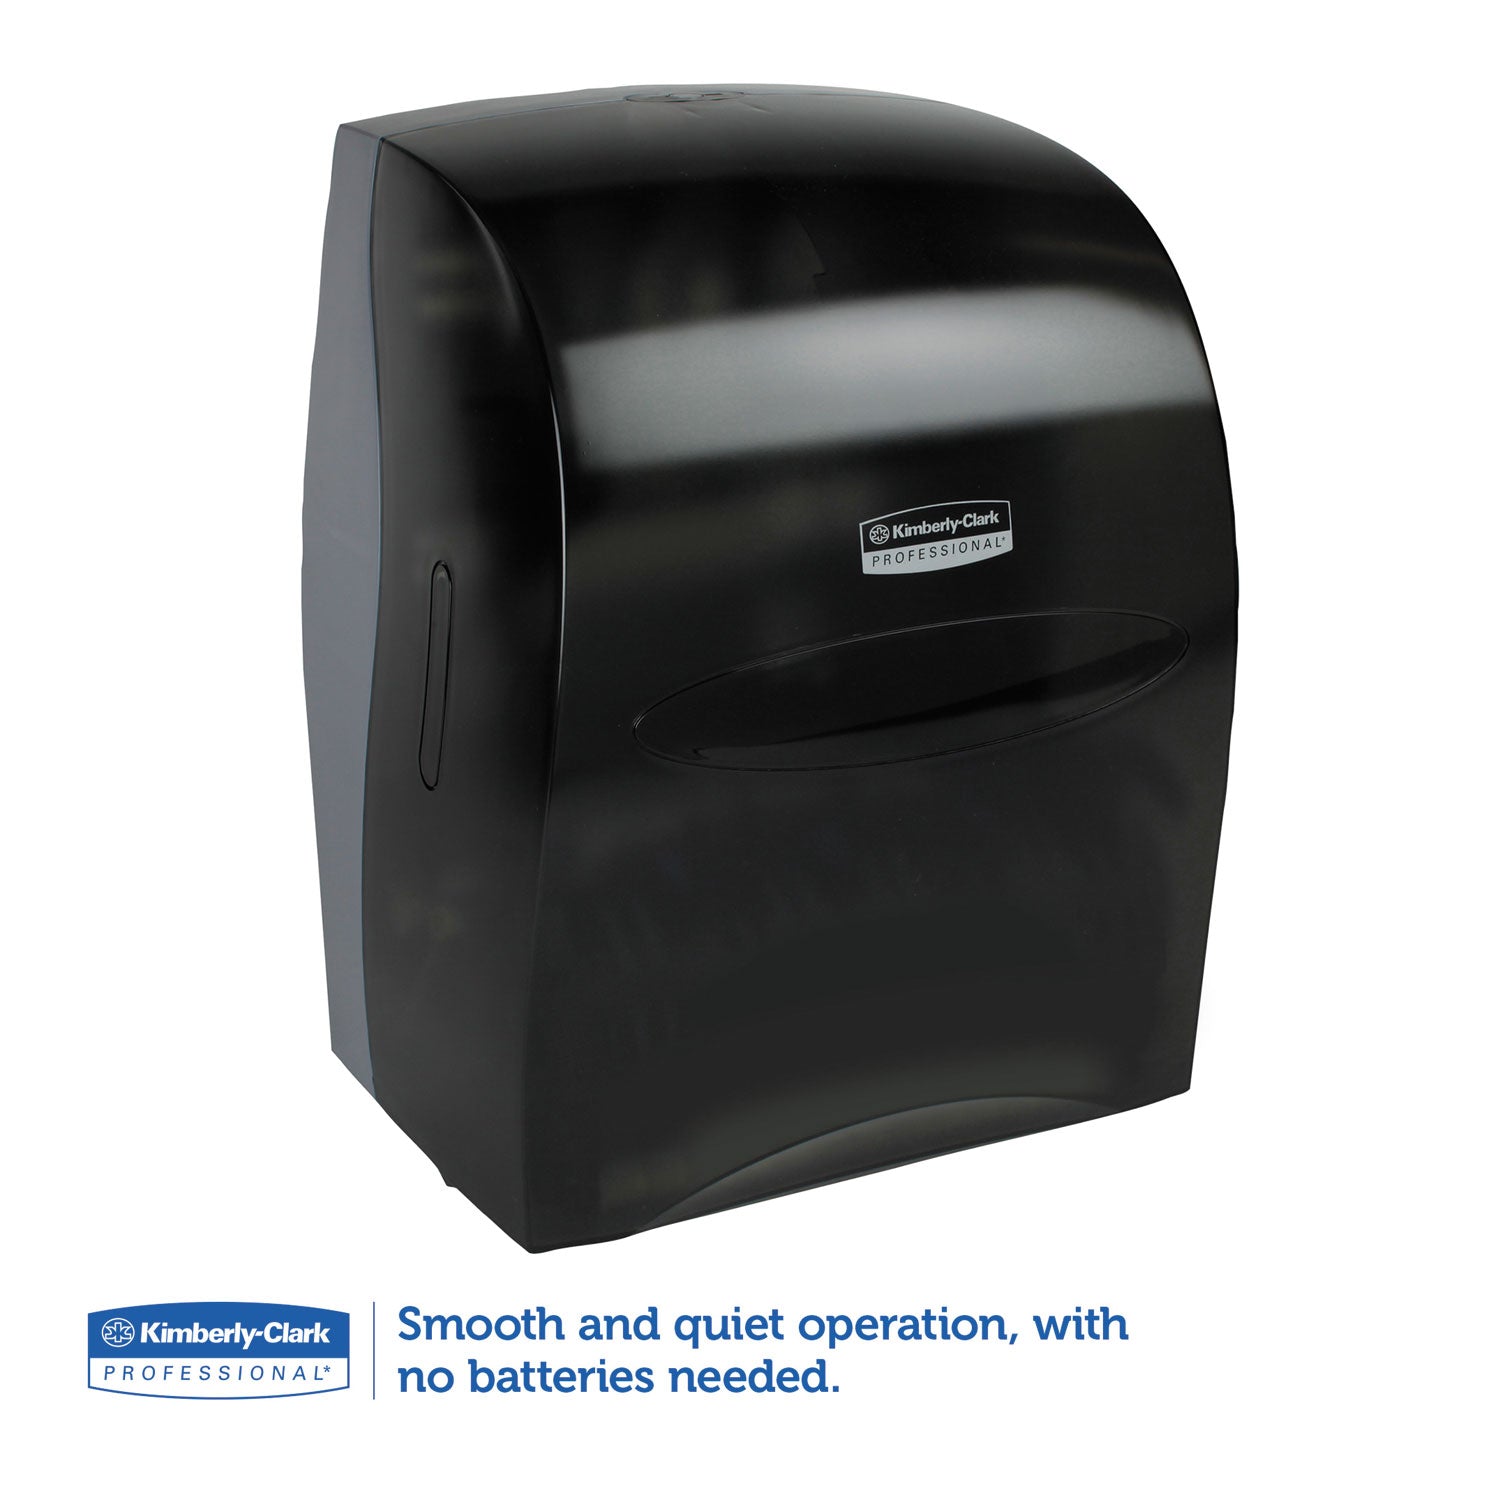 Sanitouch Hard Roll Towel Dispenser, 12.63 x 10.2 x 16.13, Smoke - 